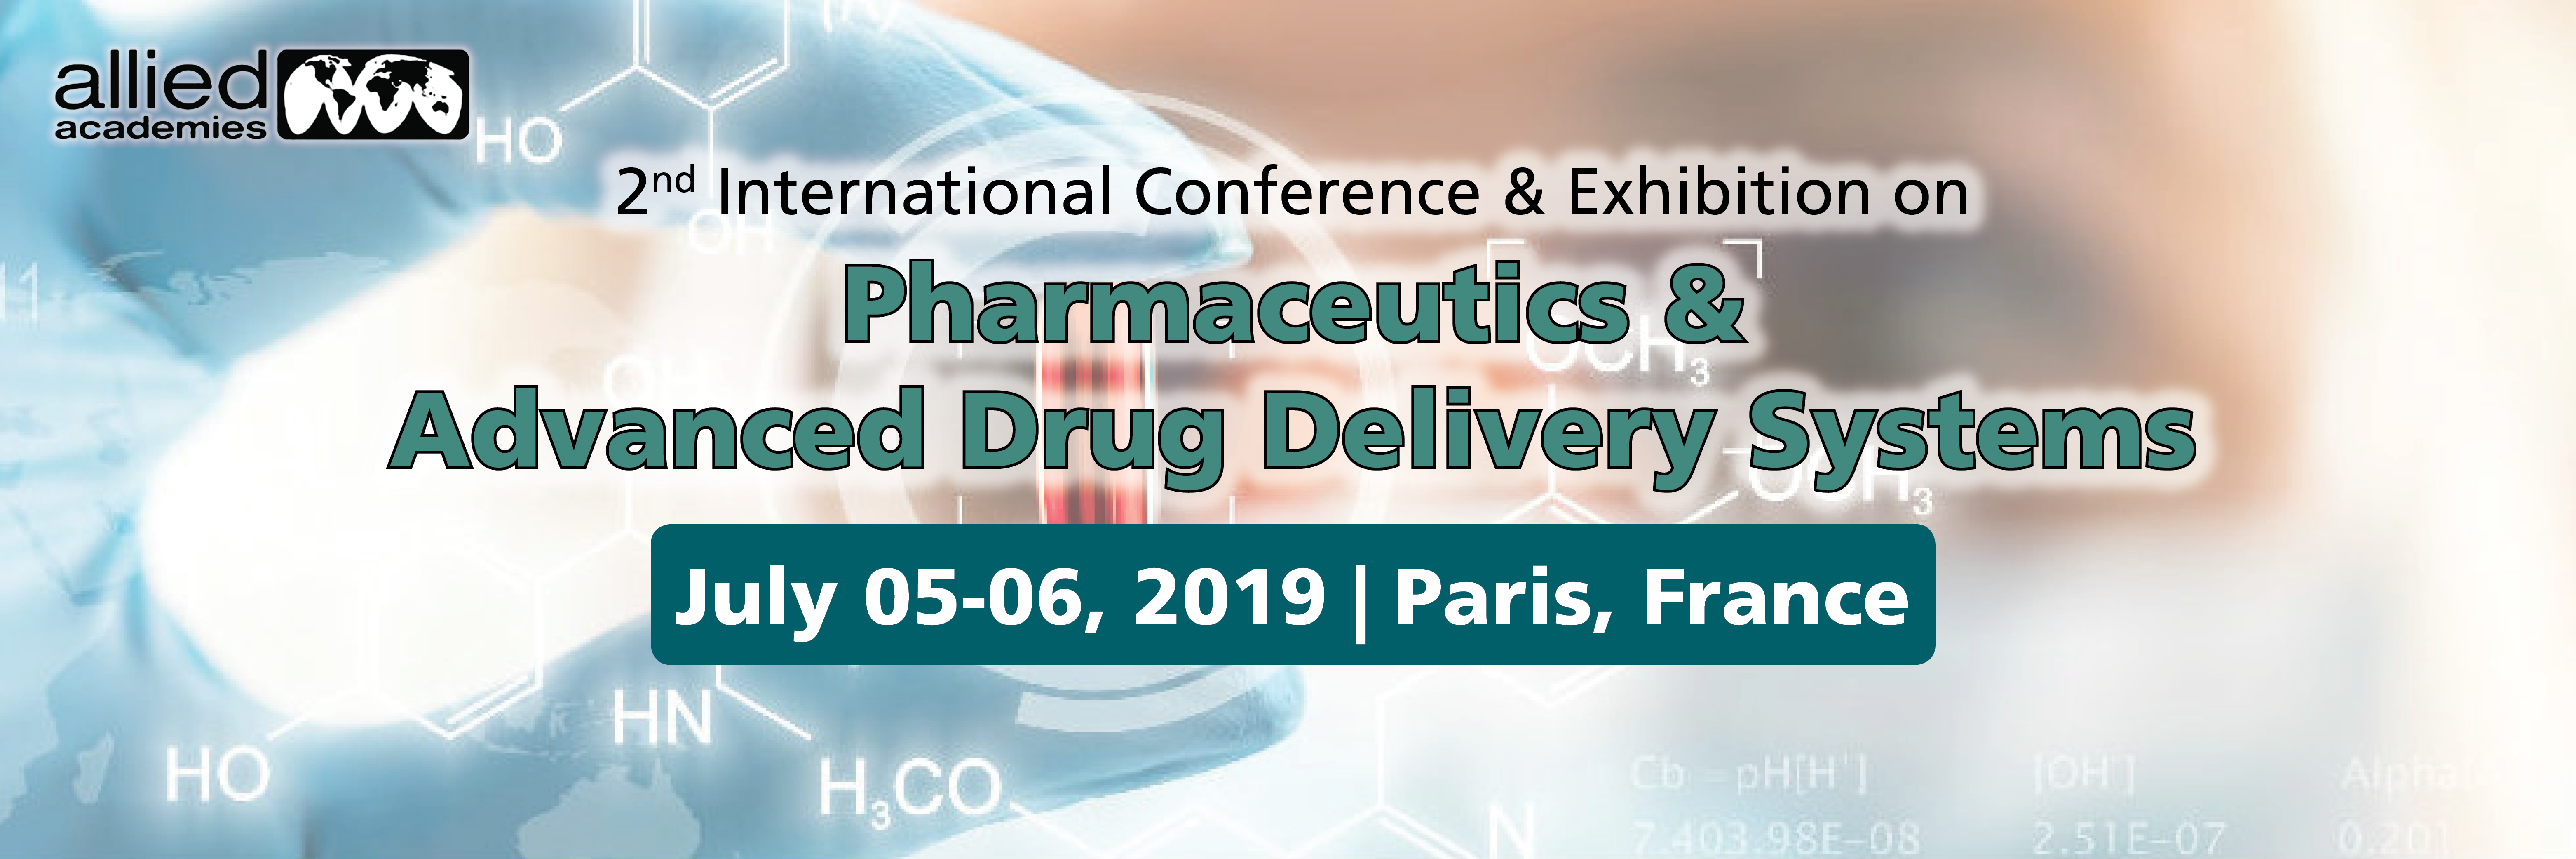 2nd World Pharma Congress 2019, Paris, France